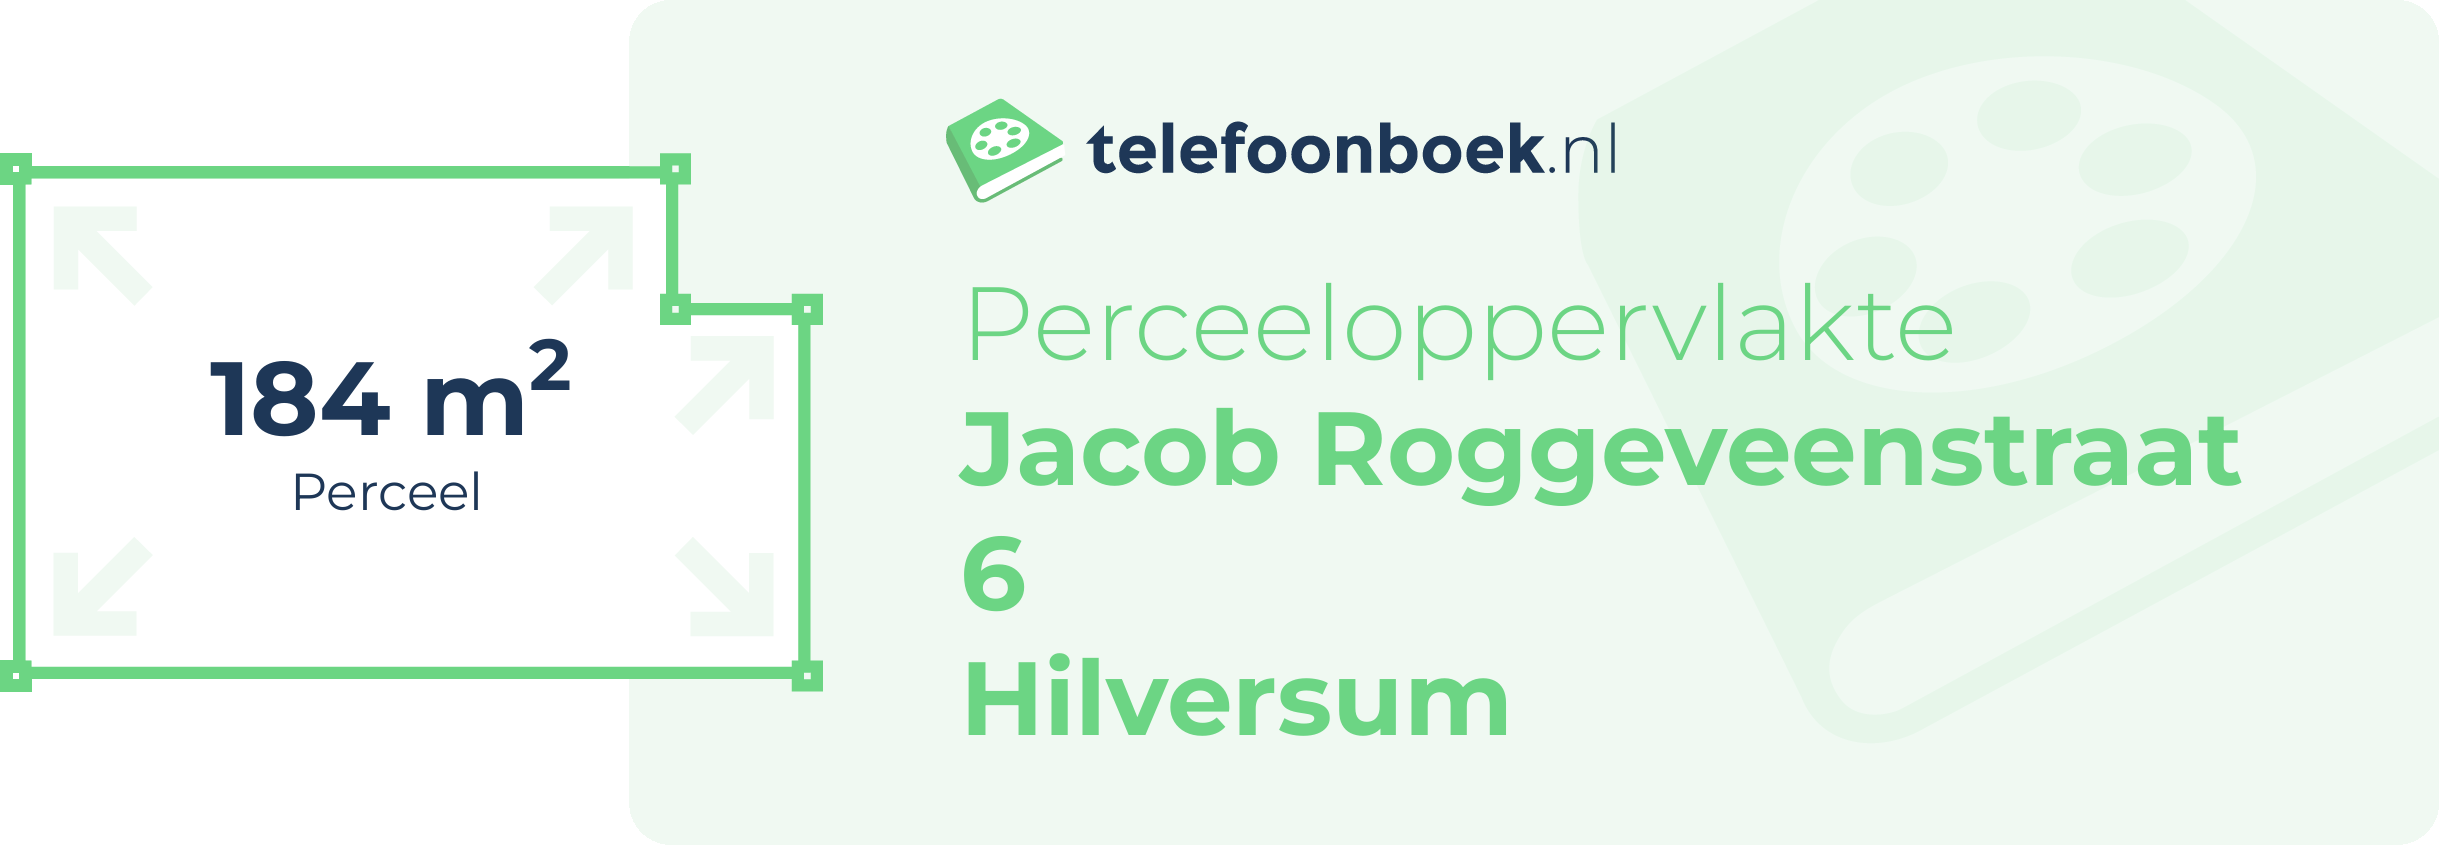 Perceeloppervlakte Jacob Roggeveenstraat 6 Hilversum